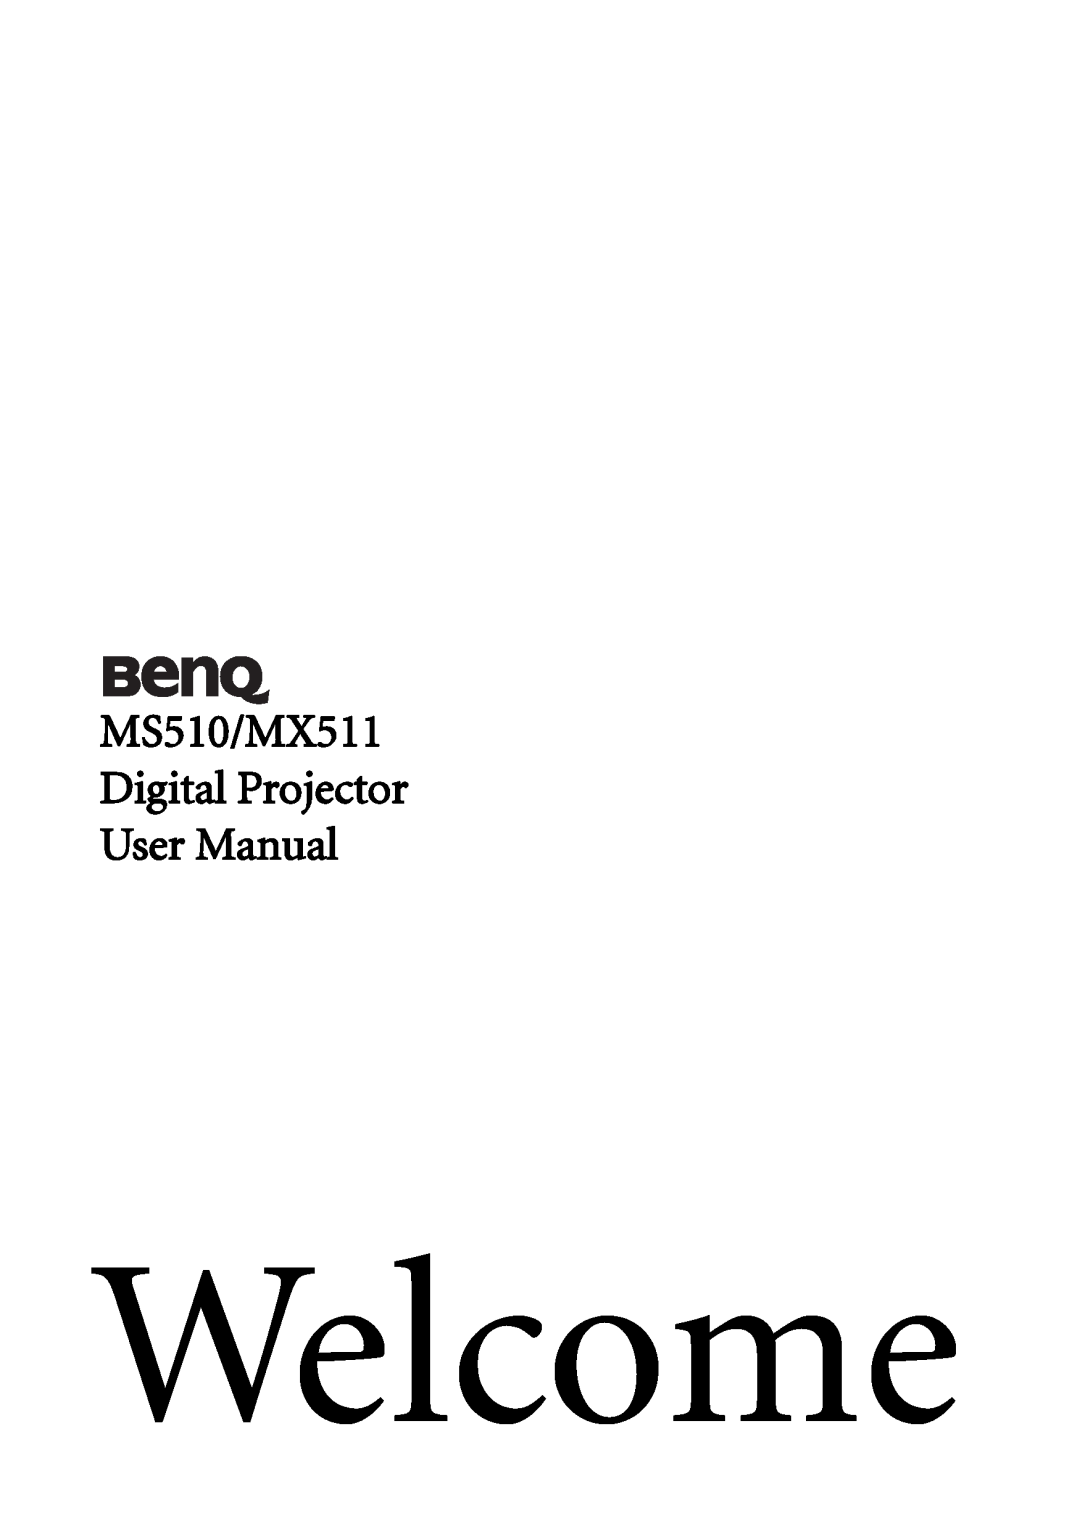 BenQ user manual MS510/MX511 Digital Projector User Manual, Welcome 